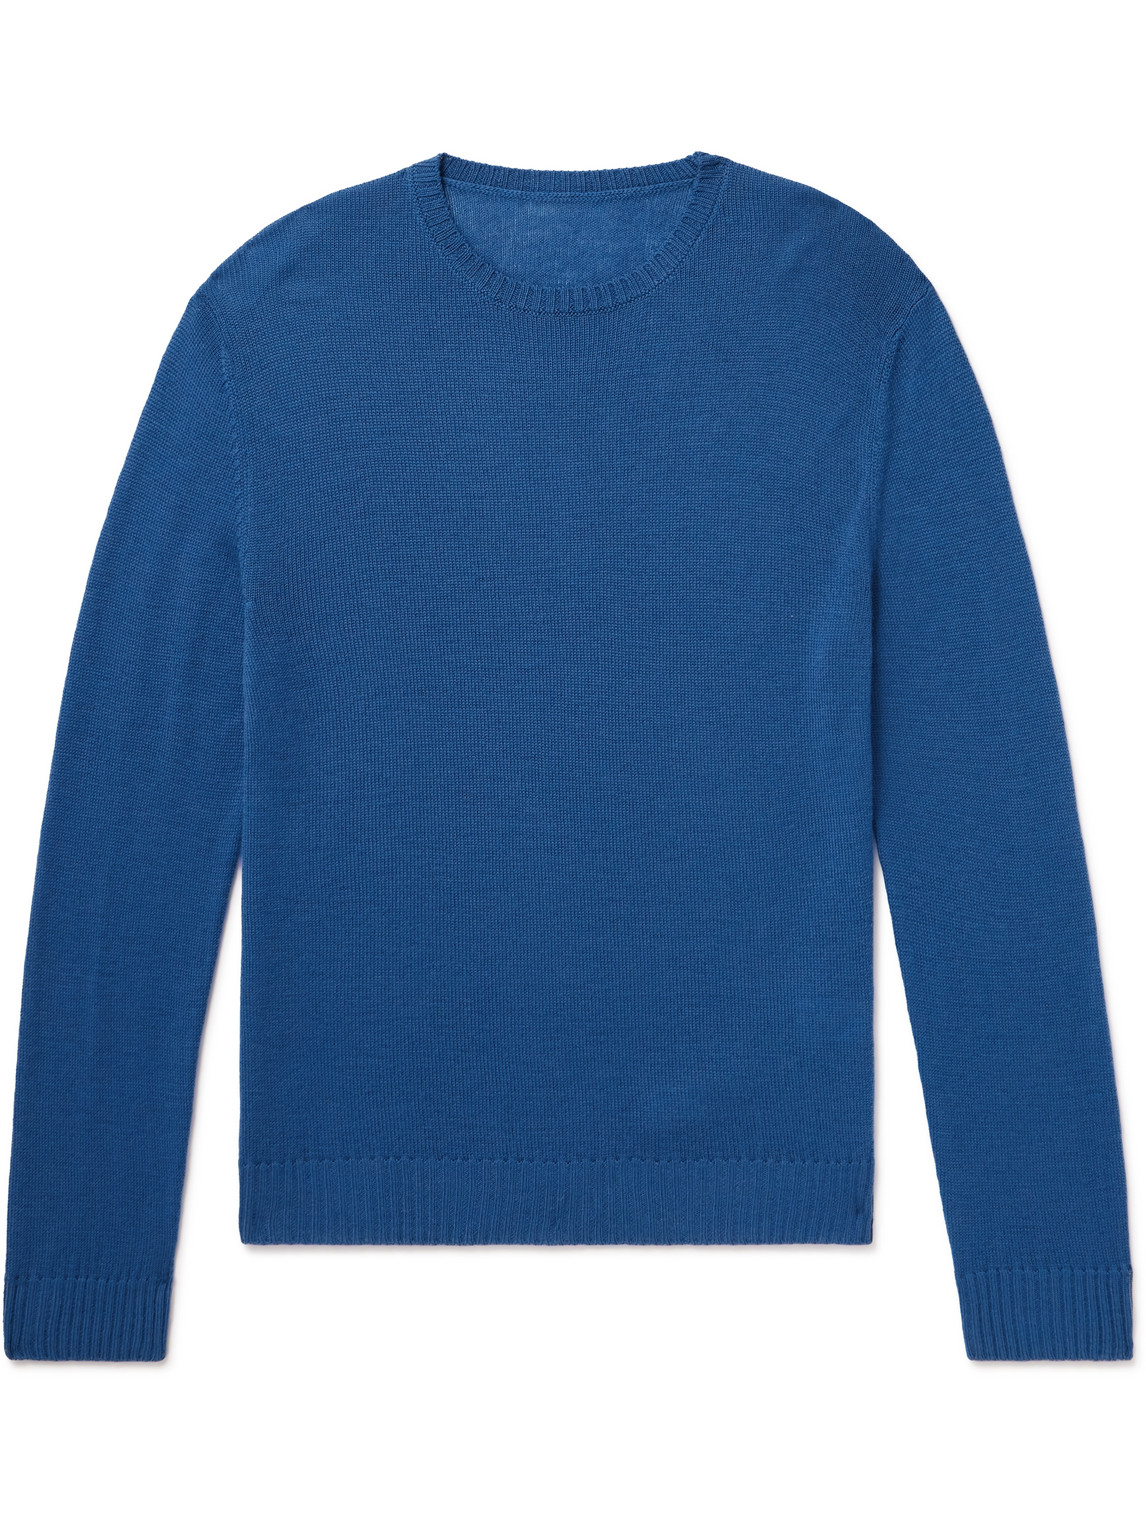 Anderson & Sheppard Merino Wool Sweater